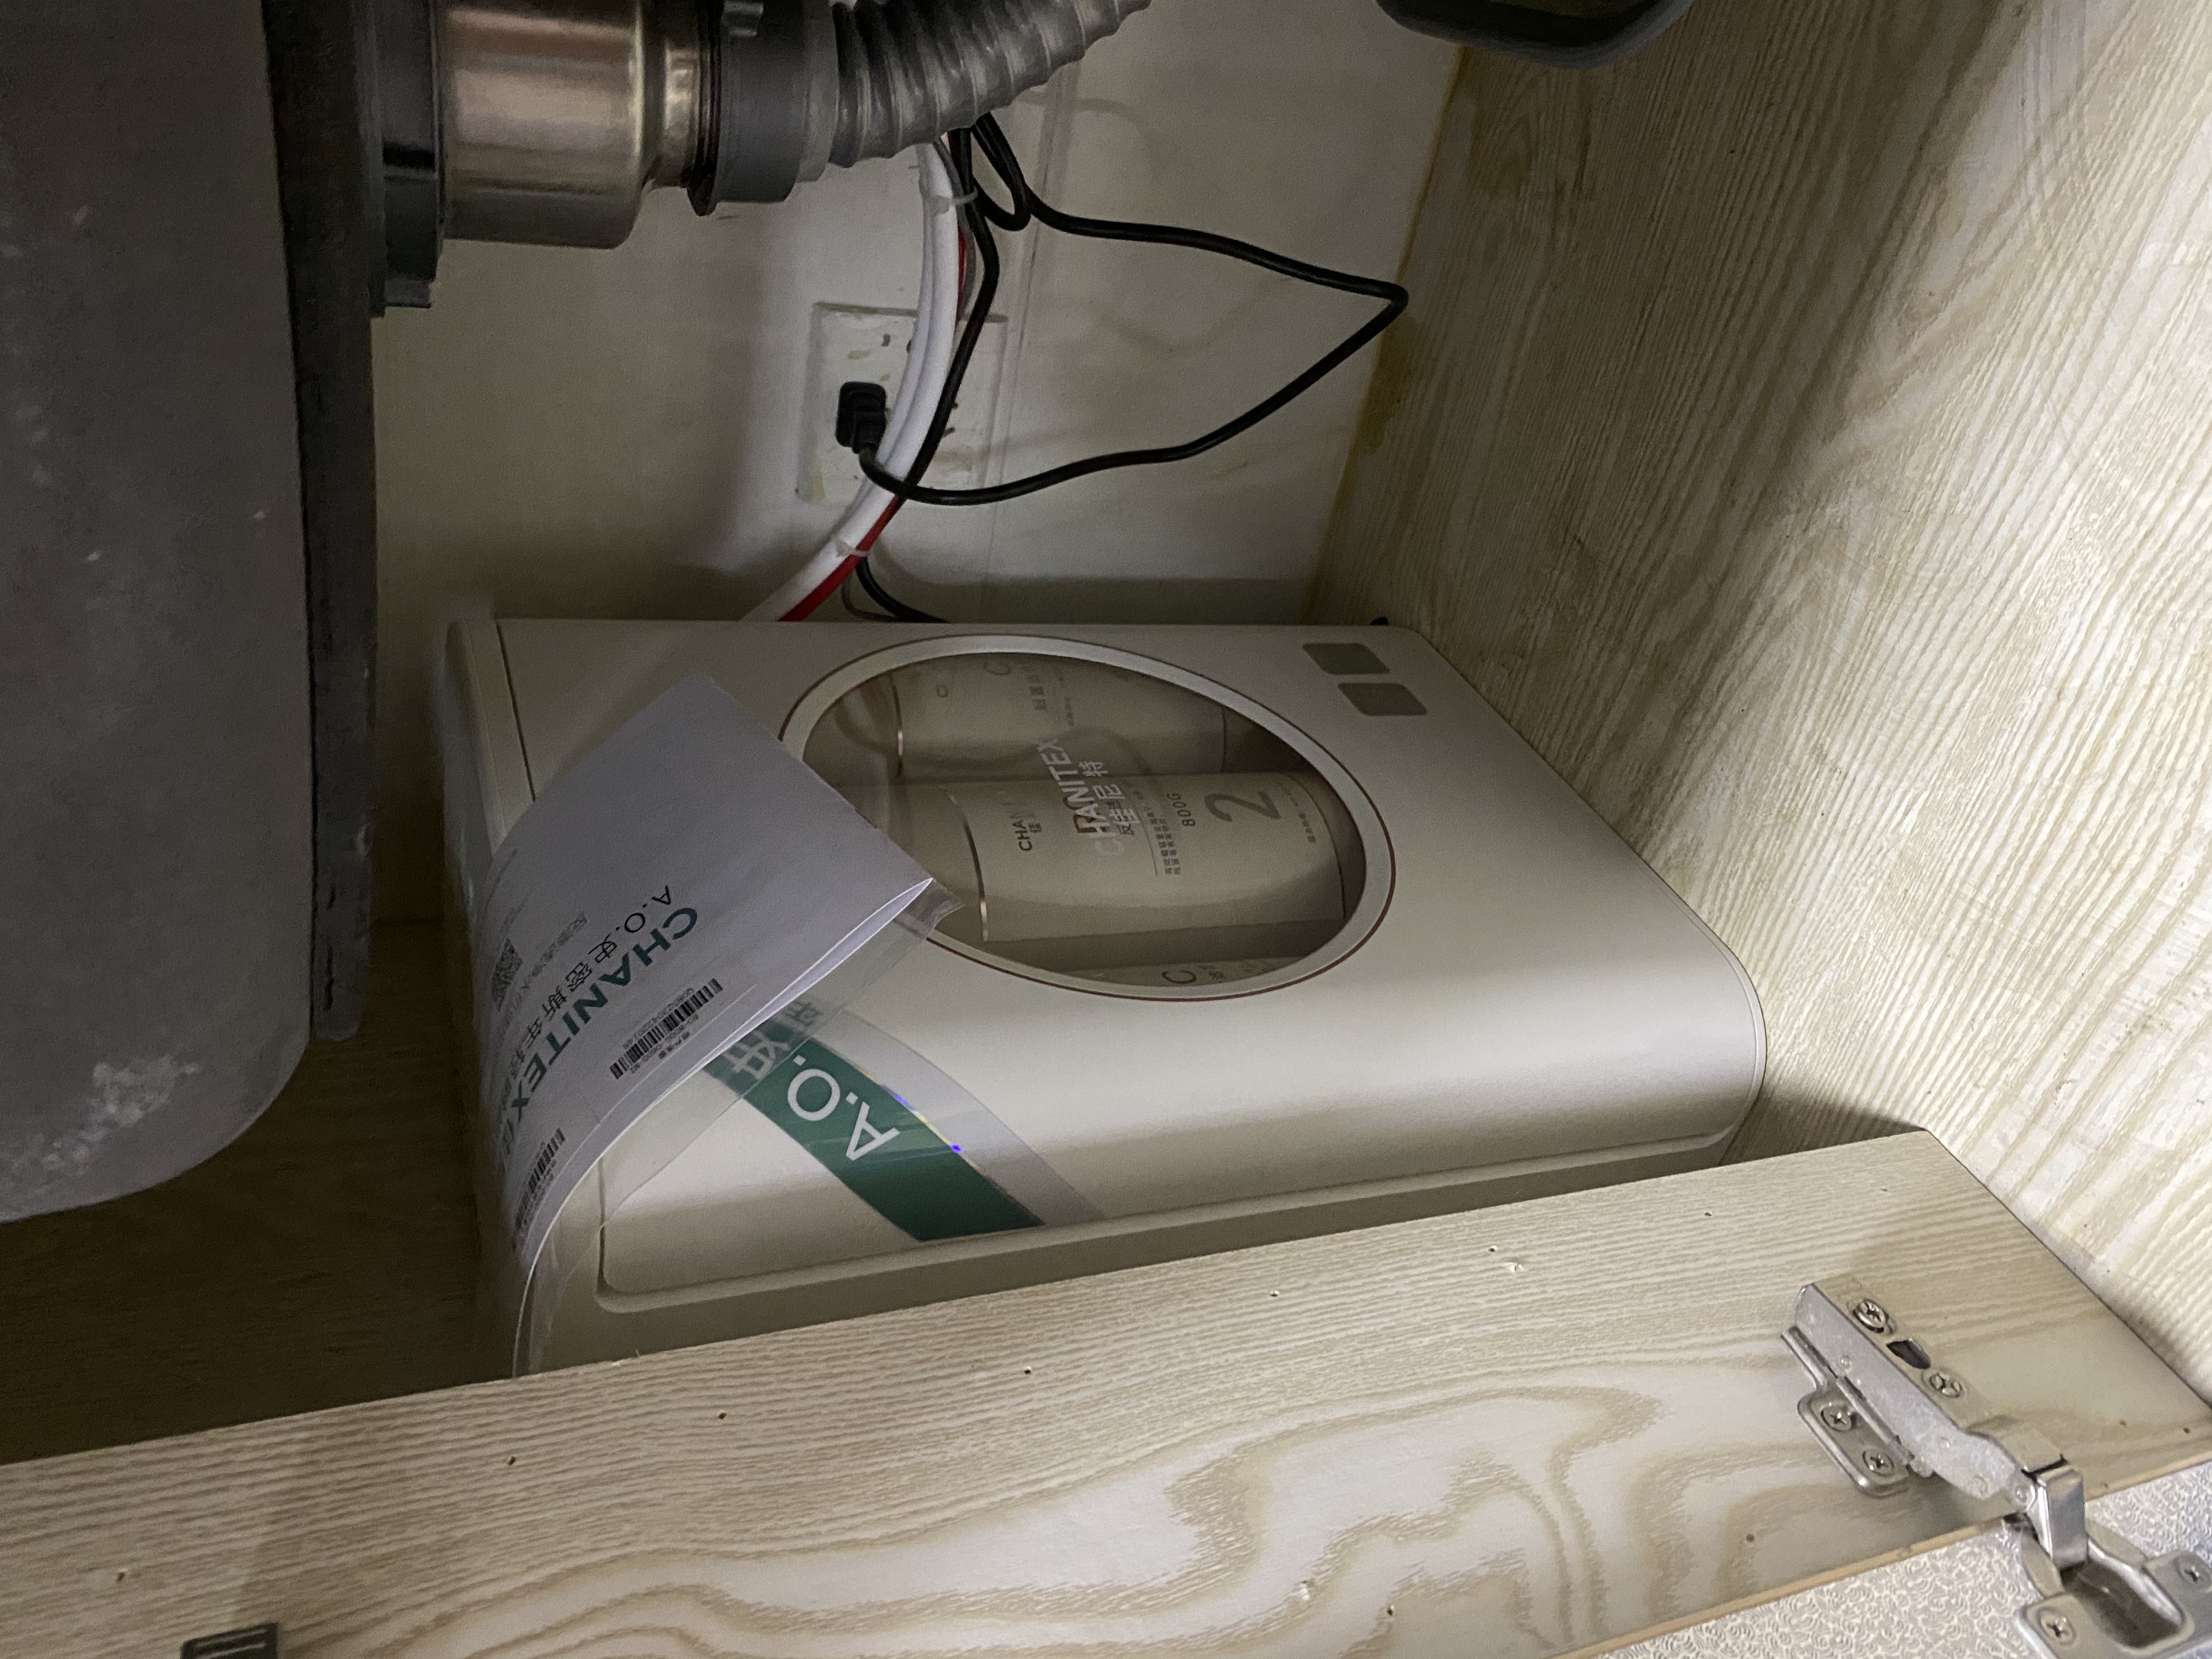 AO史密斯800G净水器家用佳尼特 直饮净水机反渗透过滤 专利4年RO膜 一级水效 大眼萌CXR800-A1晒单图